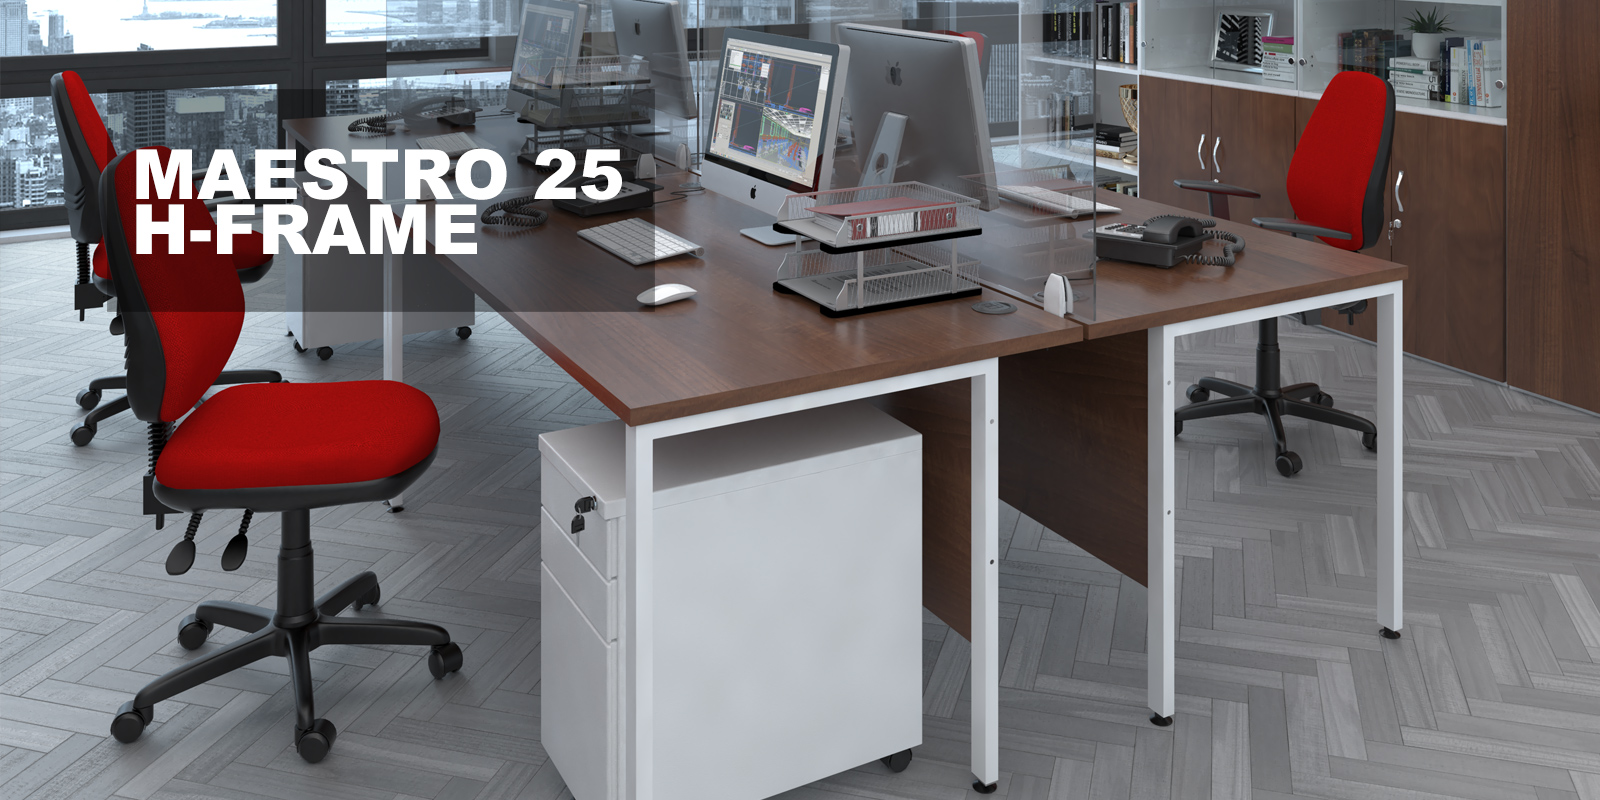 Maestro 25 H-Frame desks